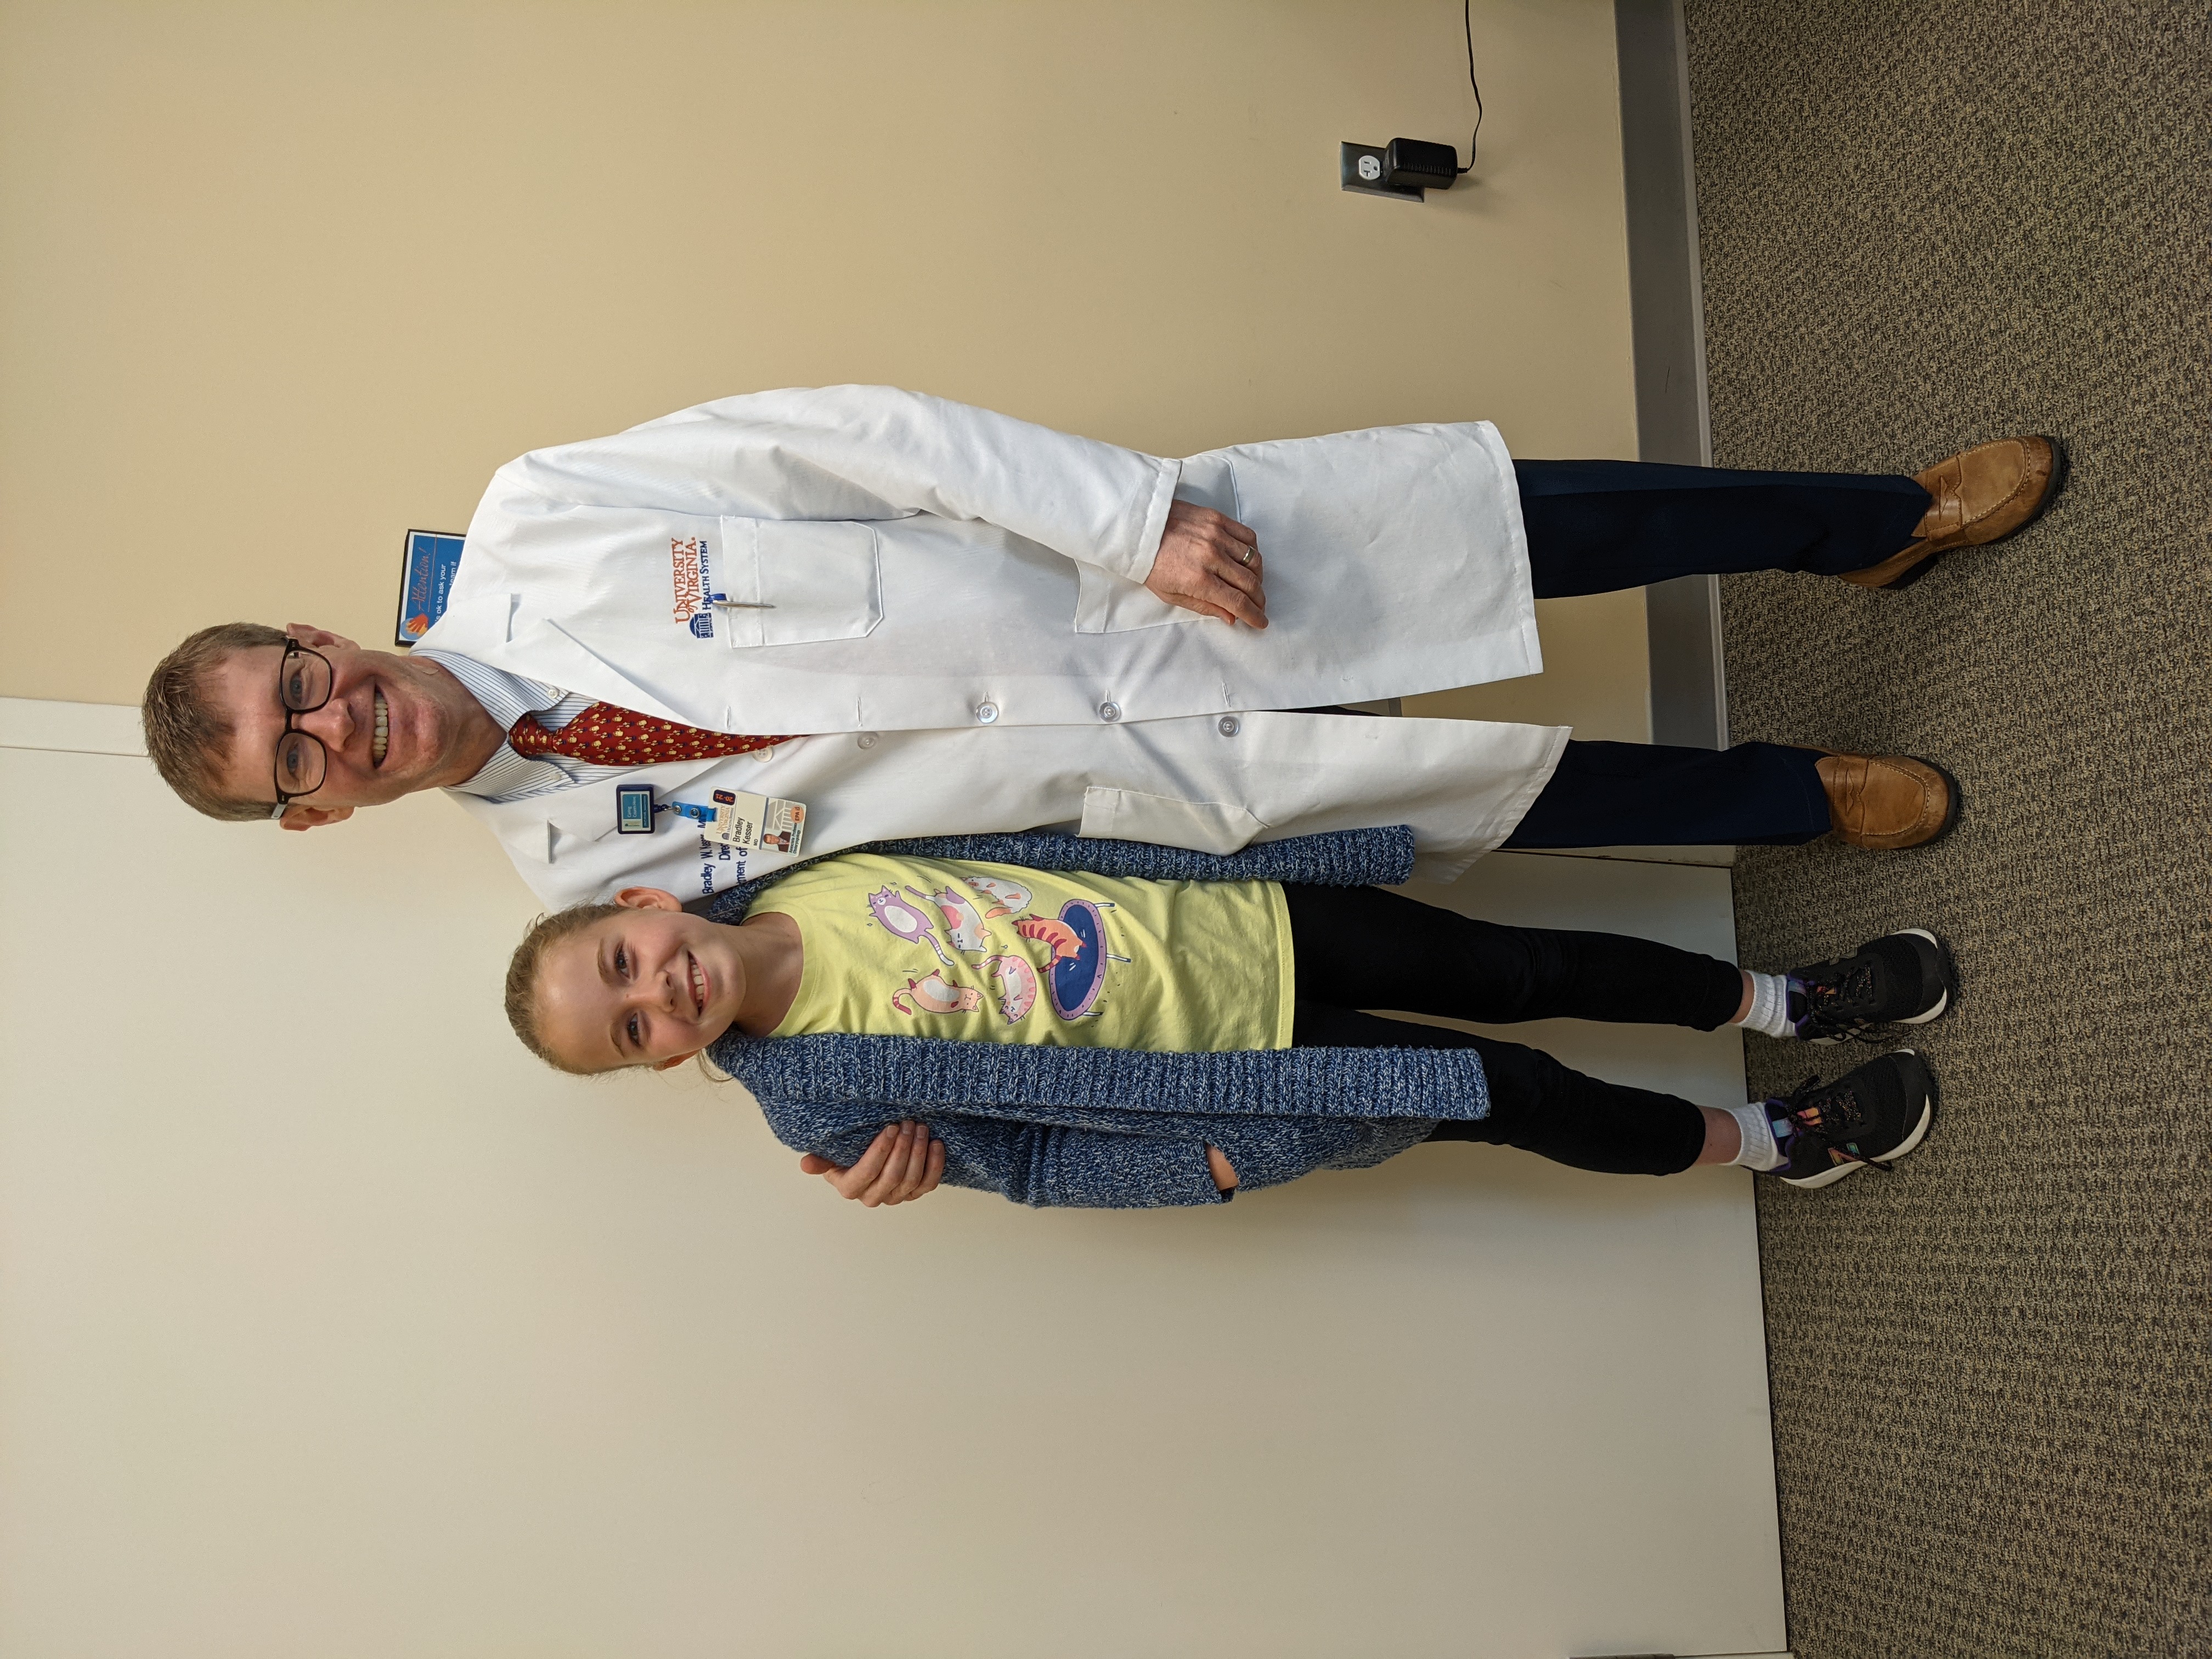 Hannah stands next to Dr. Kessser